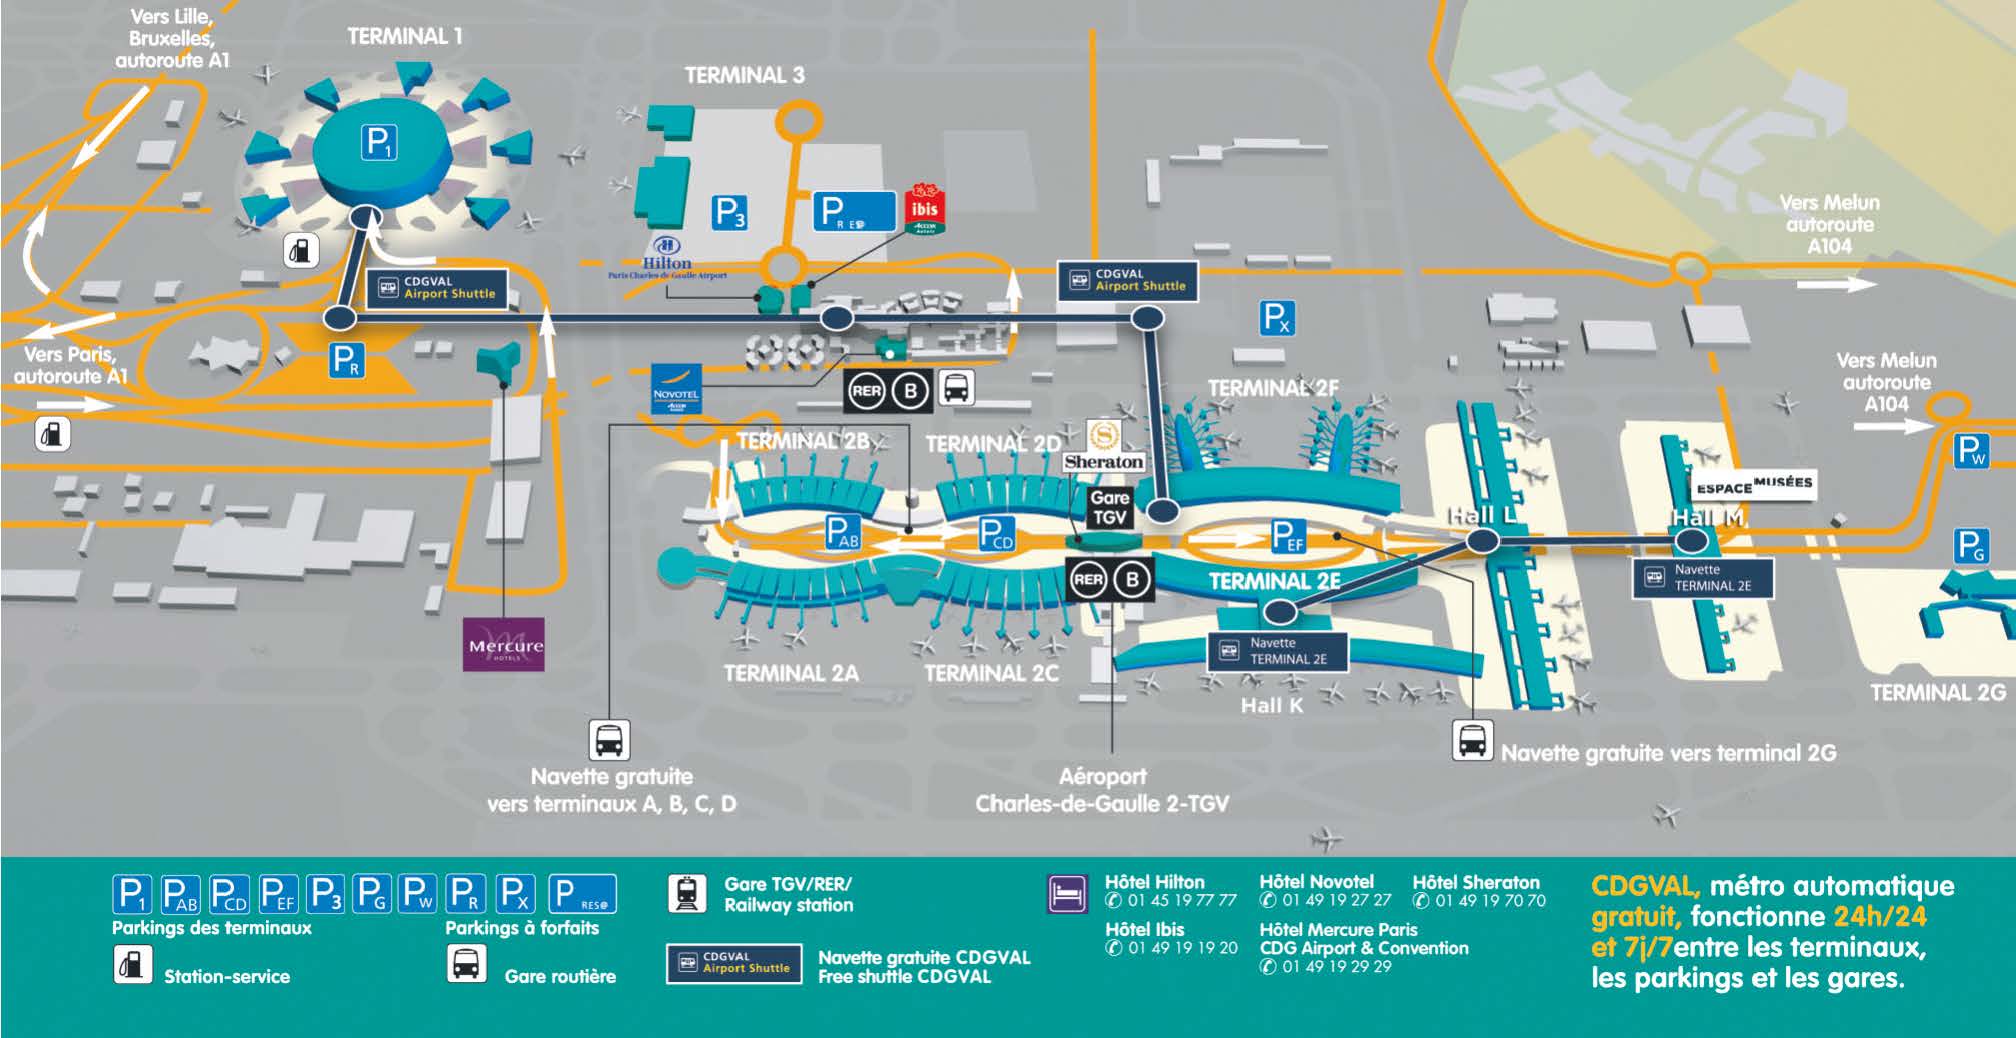 Roissy-Charles de Gaulle Airport Map - Paris by Train